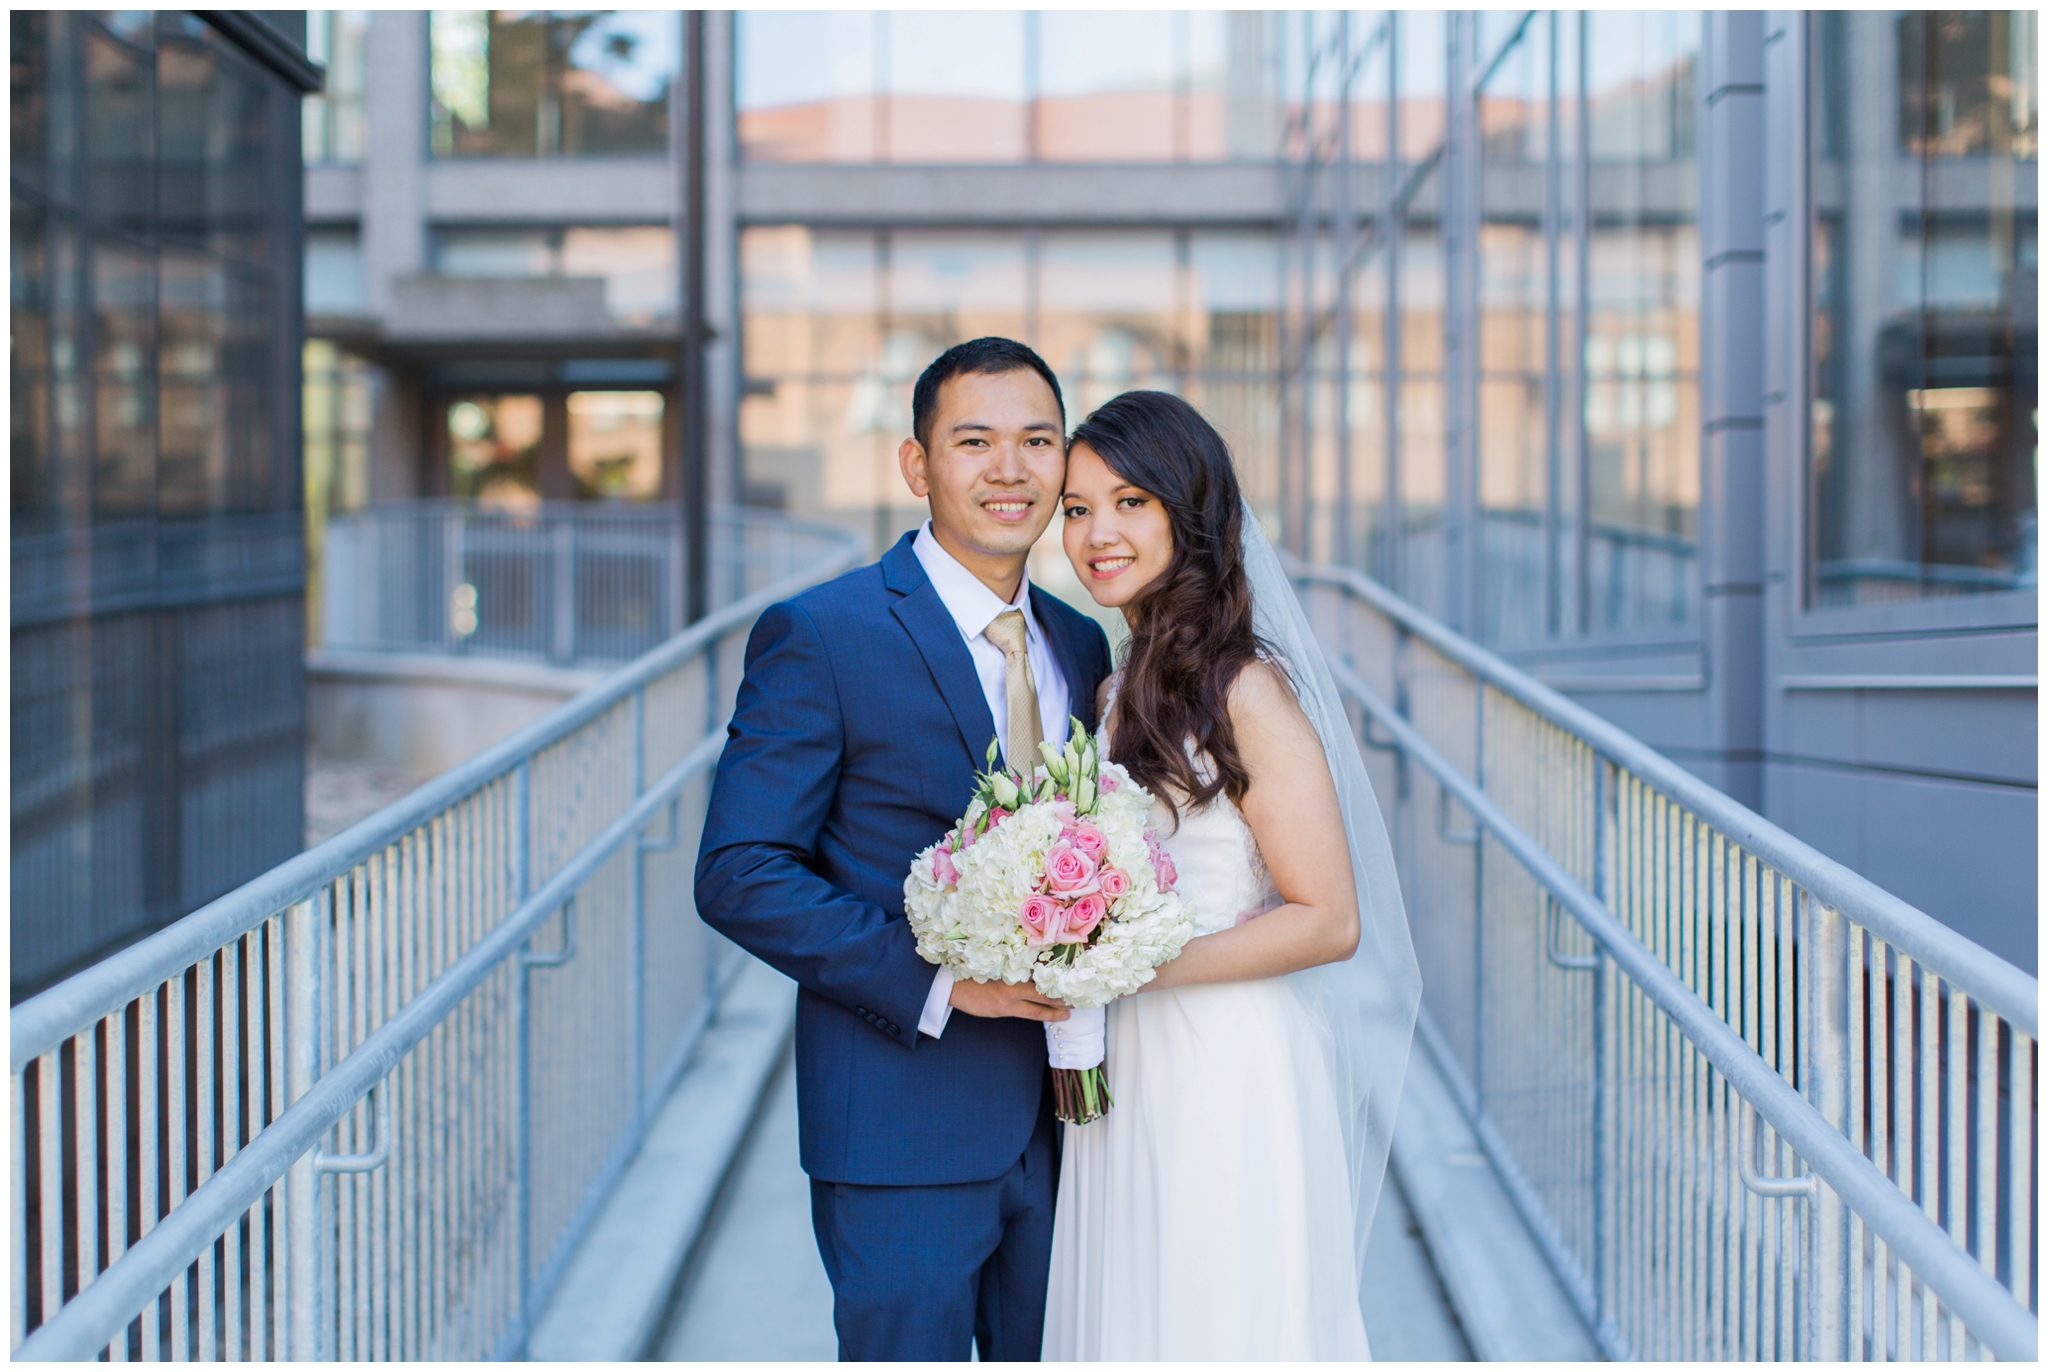 Luan & Ngoc Got Hitched! | Wedding Photography | Lincoln, Nebraska